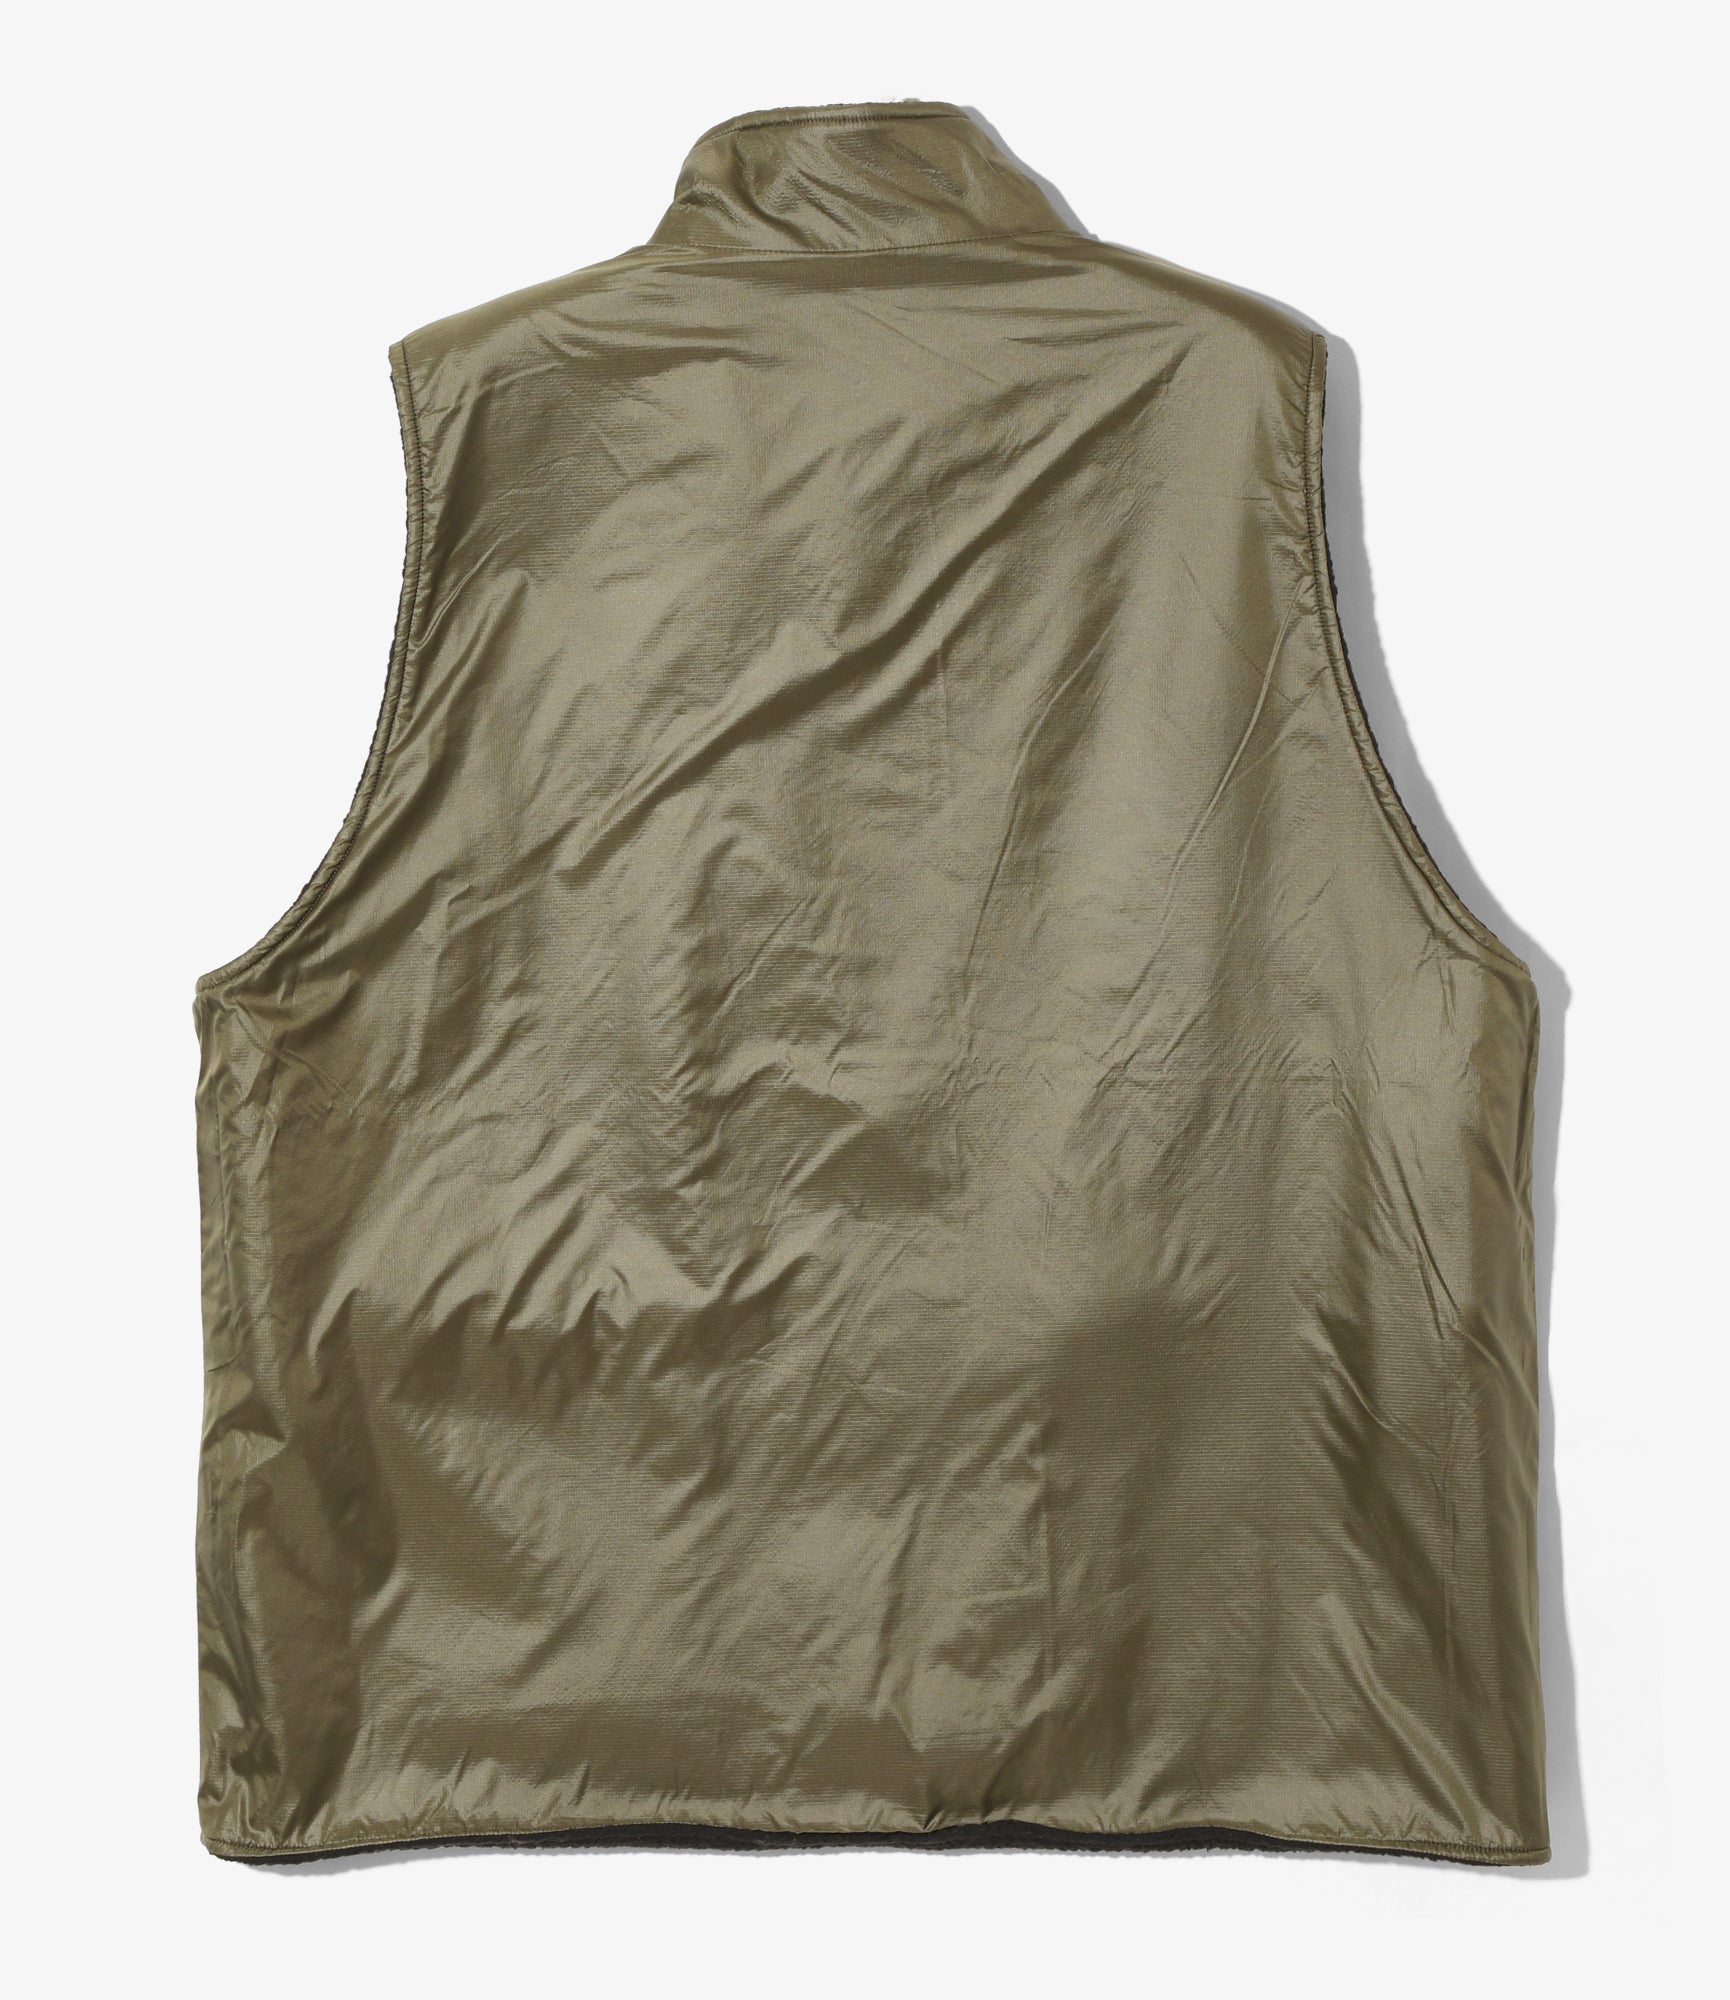 Reversible Vest - Black - Poly Fleece / Nylon Ripstop